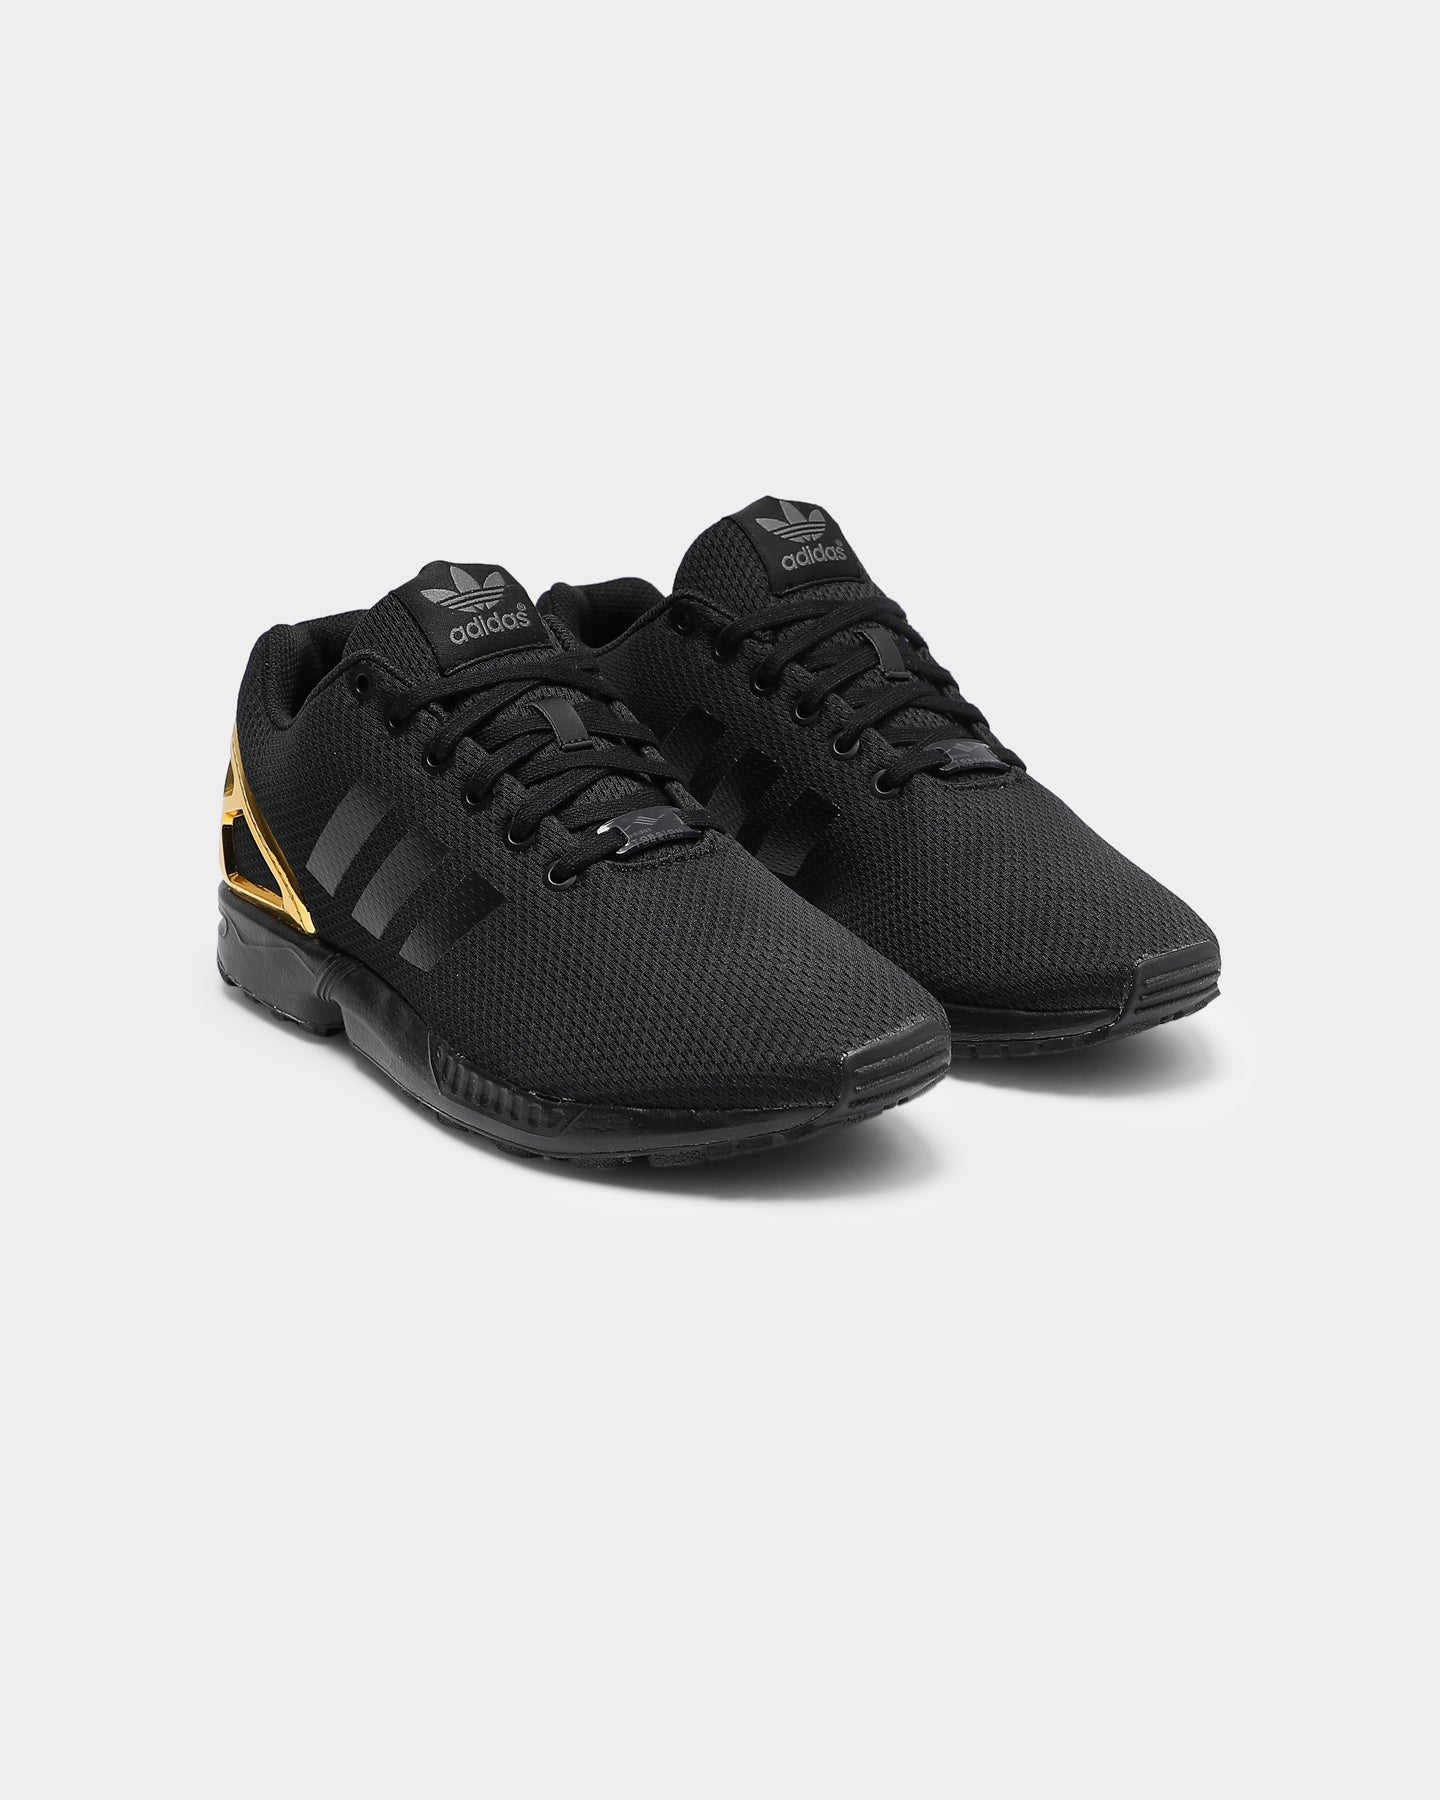 adidas zx flux black gold